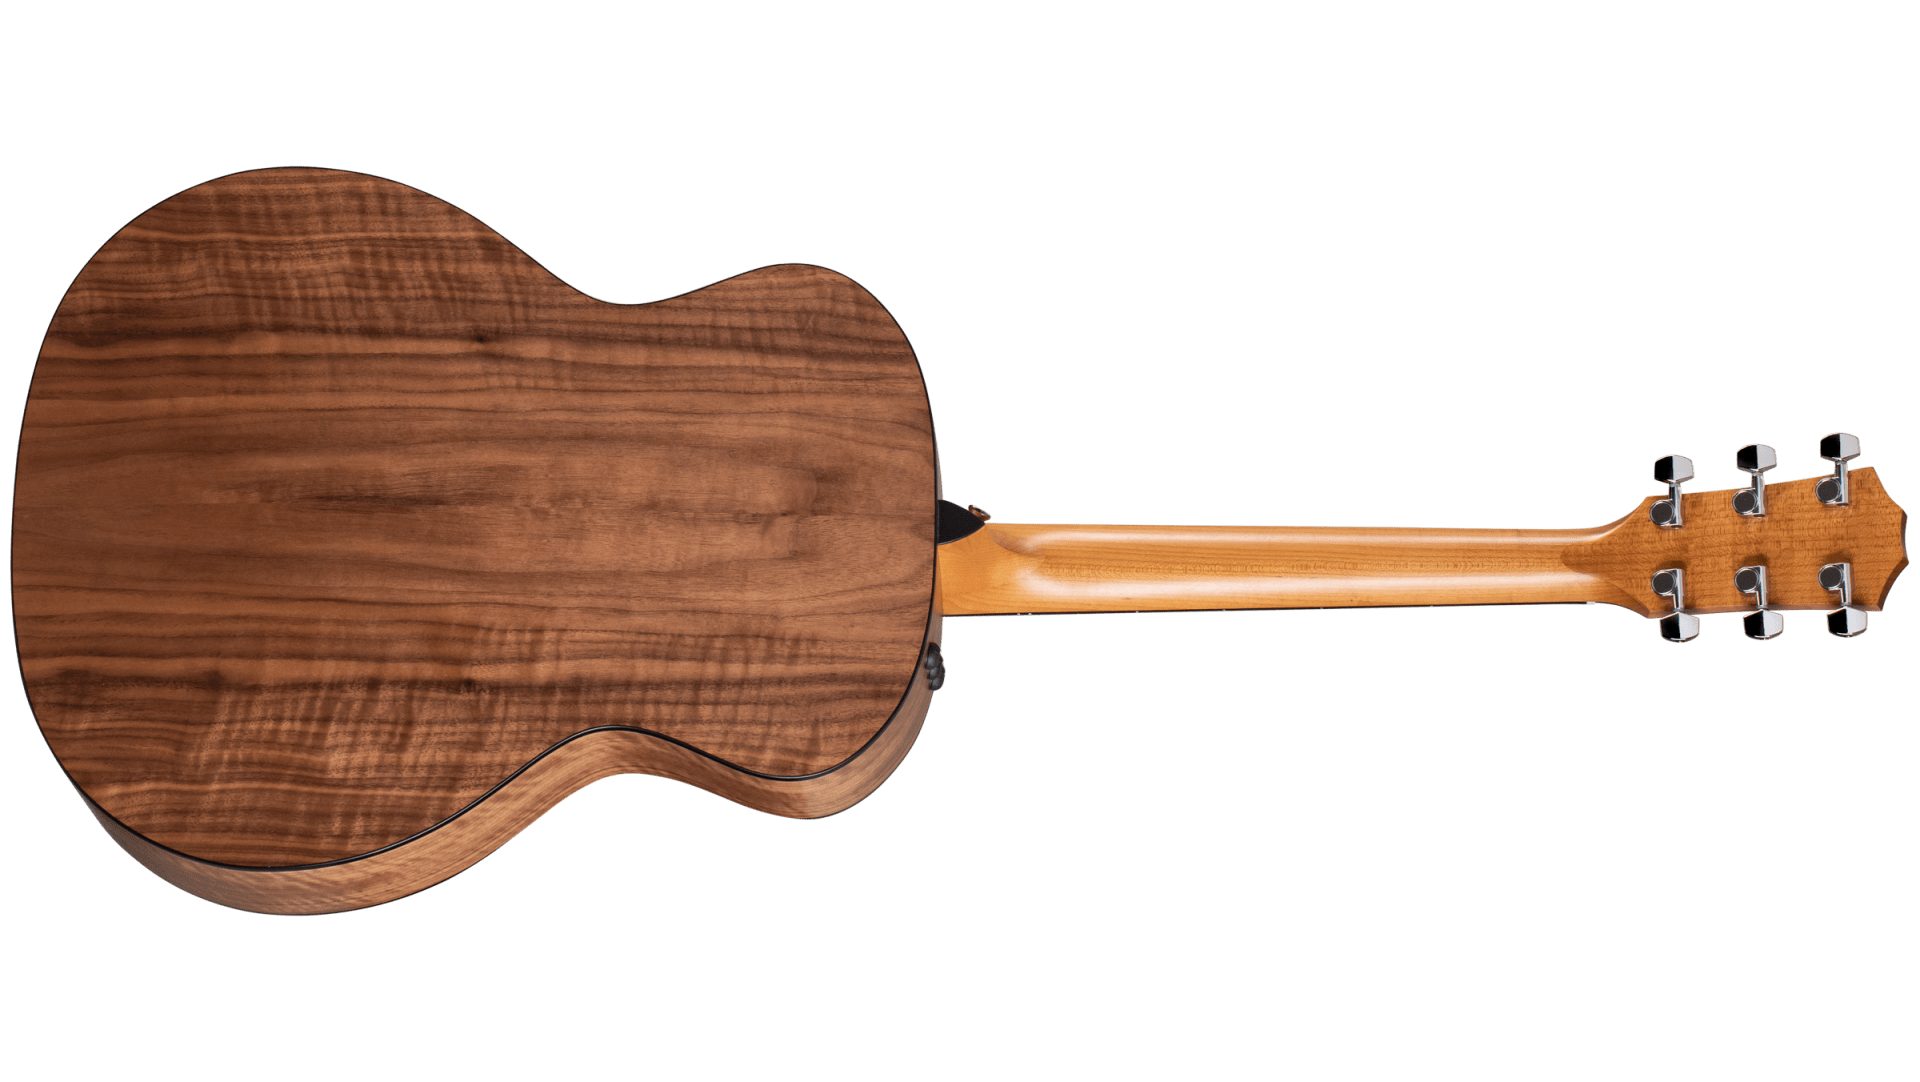 Taylor 114CE 100 Series Grand Auditorium Cutaway A/E Guitar (Natural, Sapele Back & Sides)